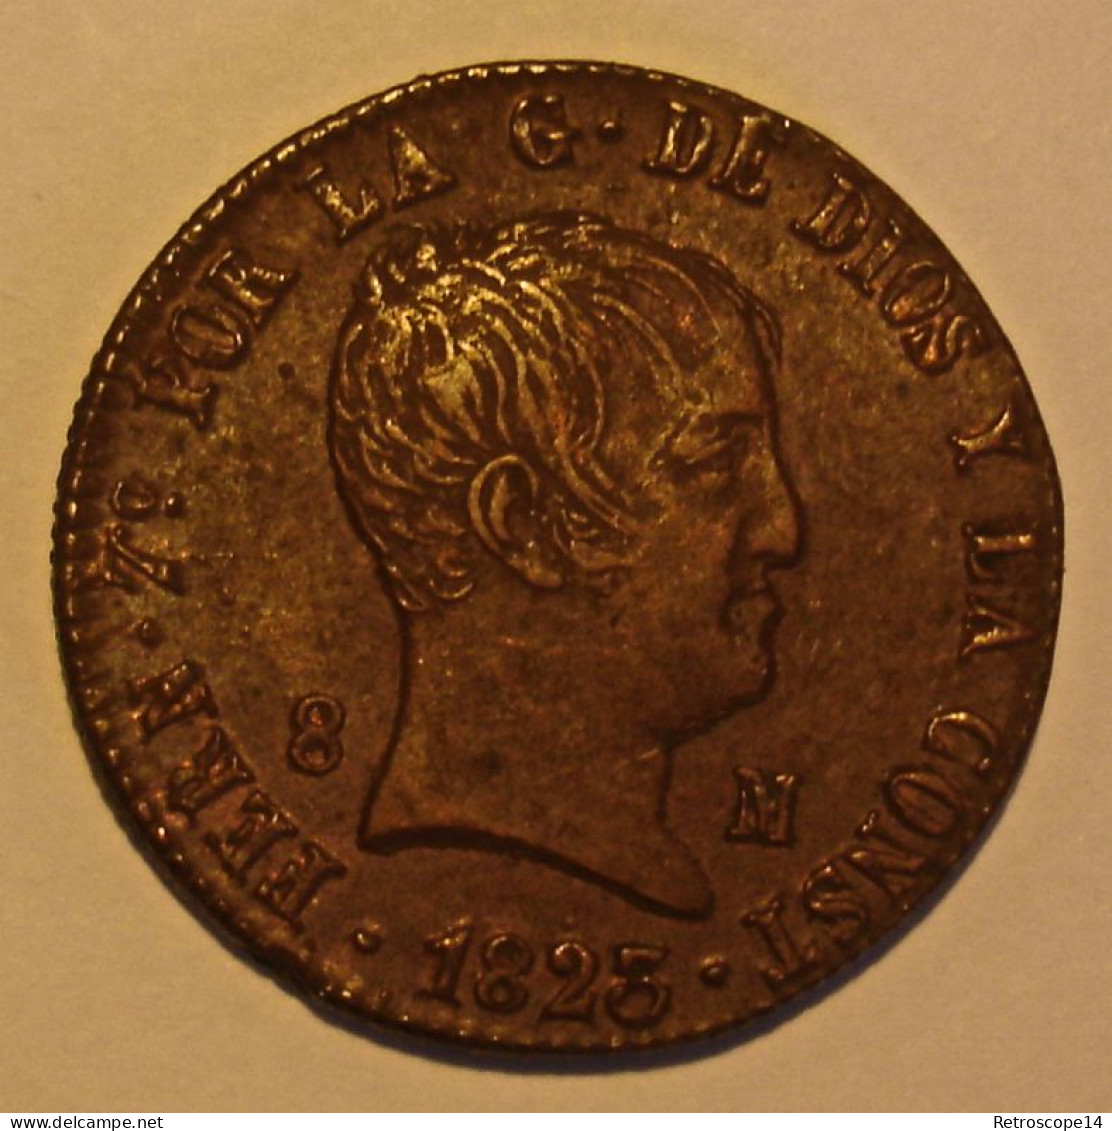 RARO 1823 FERDINAND VII 8 MARAVEDIS ANVERSO 8/M Segovia Espagna Muy Hermosa. - Monnaies Provinciales